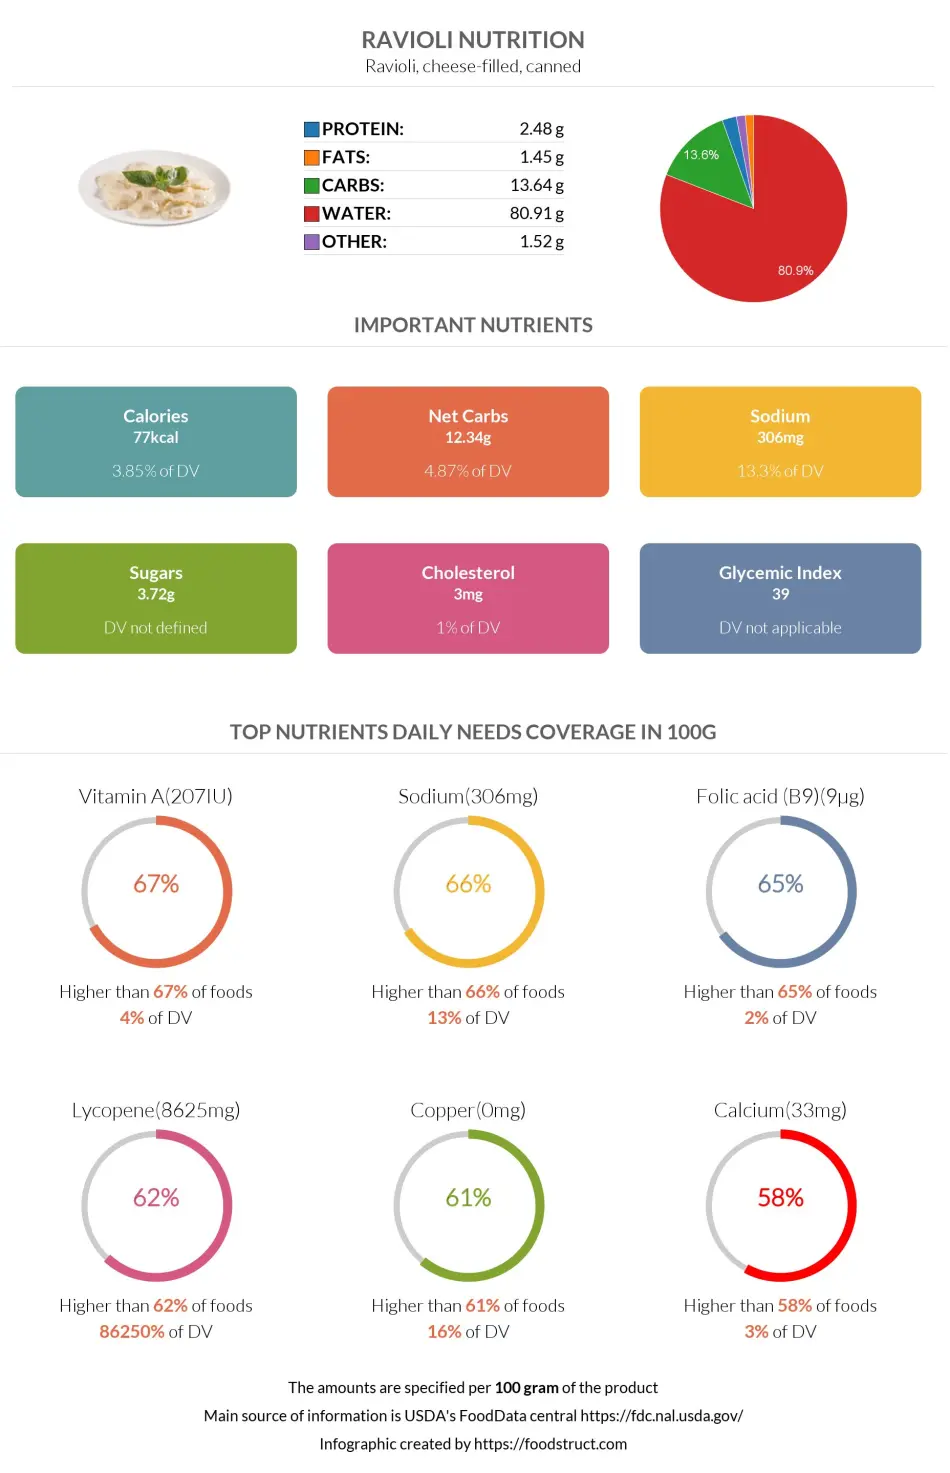 Ravioli nutrition infographic